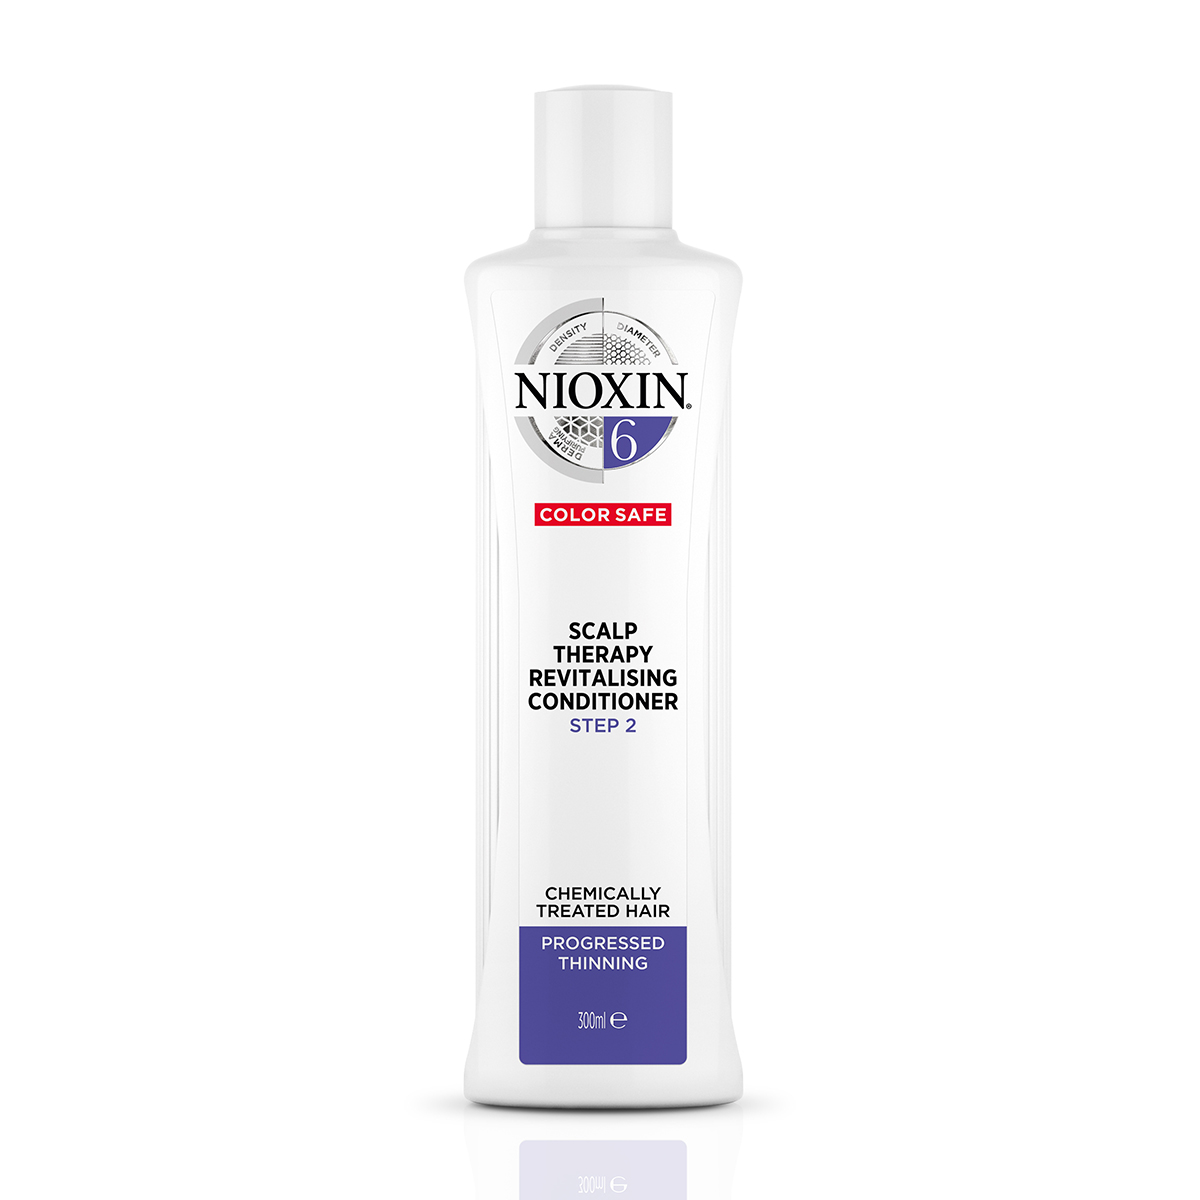 Nioxin System 6 Scalp Revitalizing Conditioner 300ml - Hairsale.se